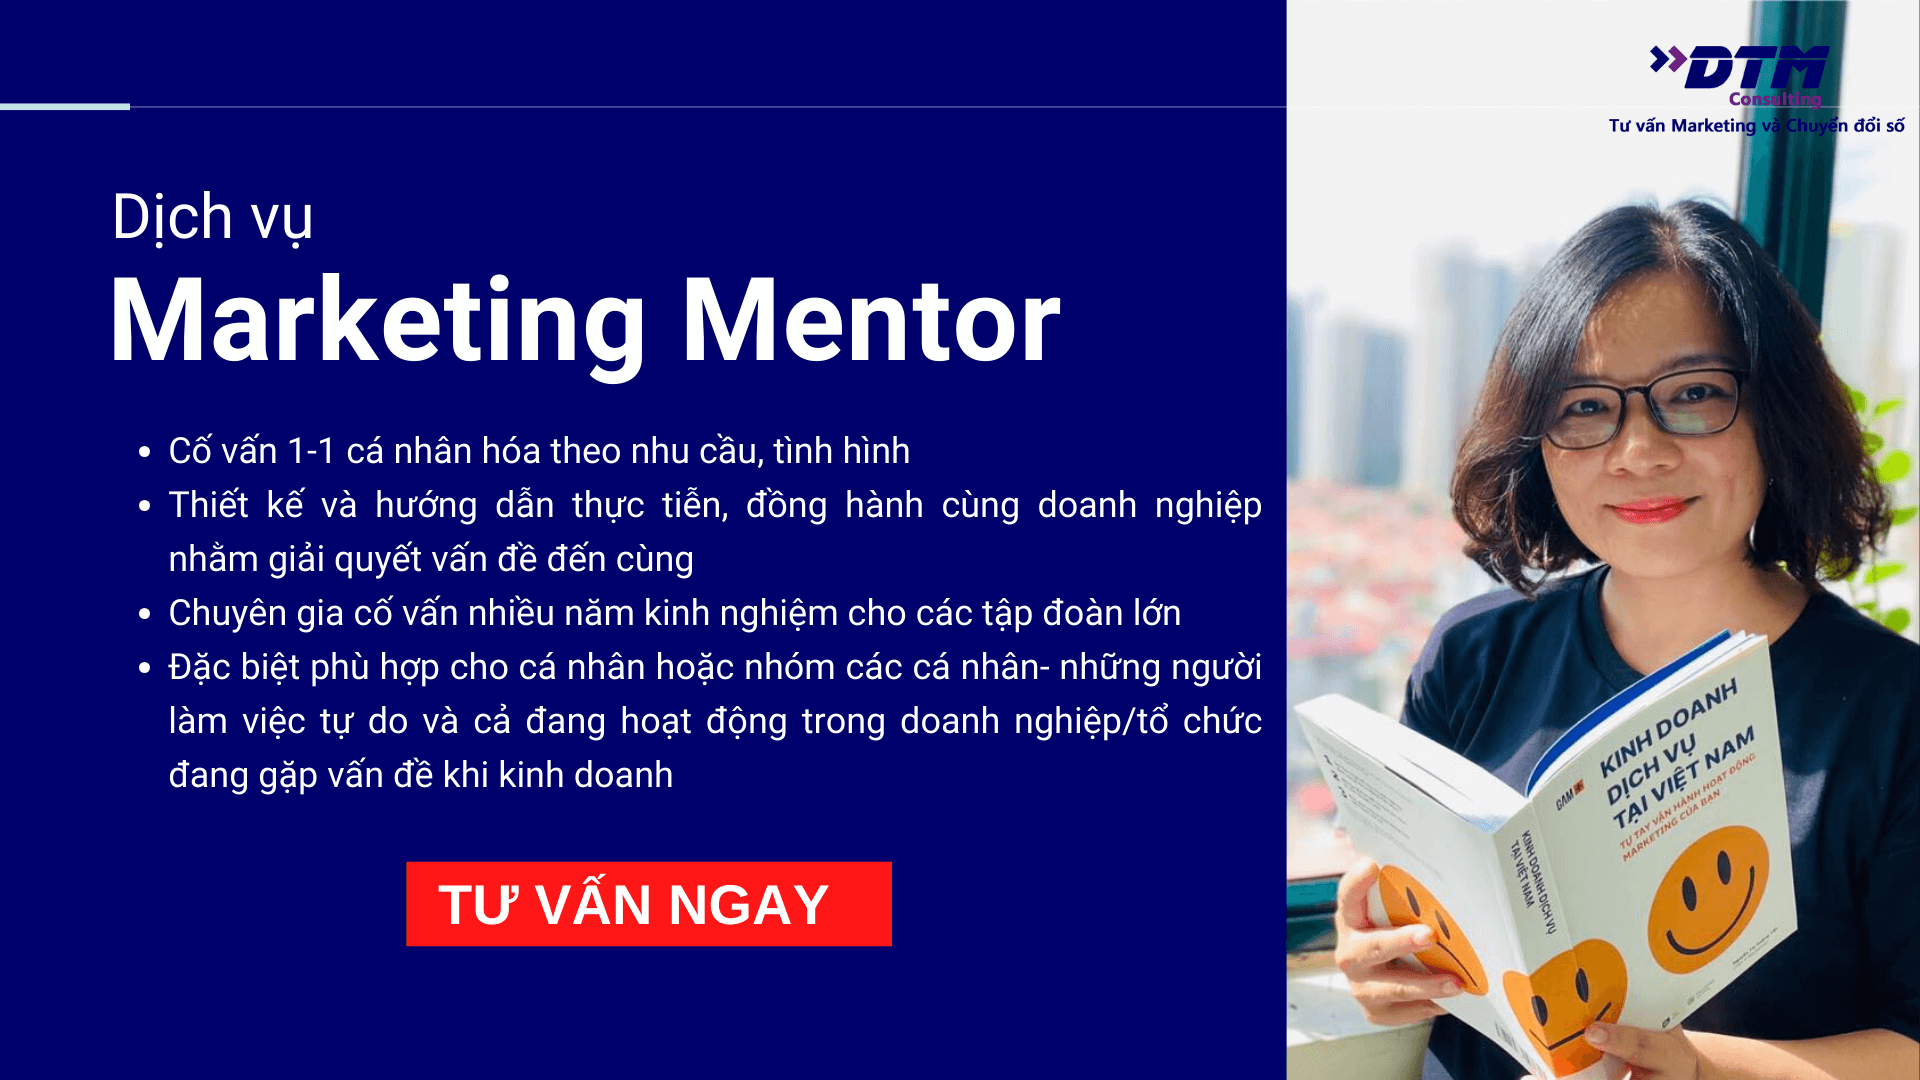 Cố vấn marketing marketing mentor DTM Consulting